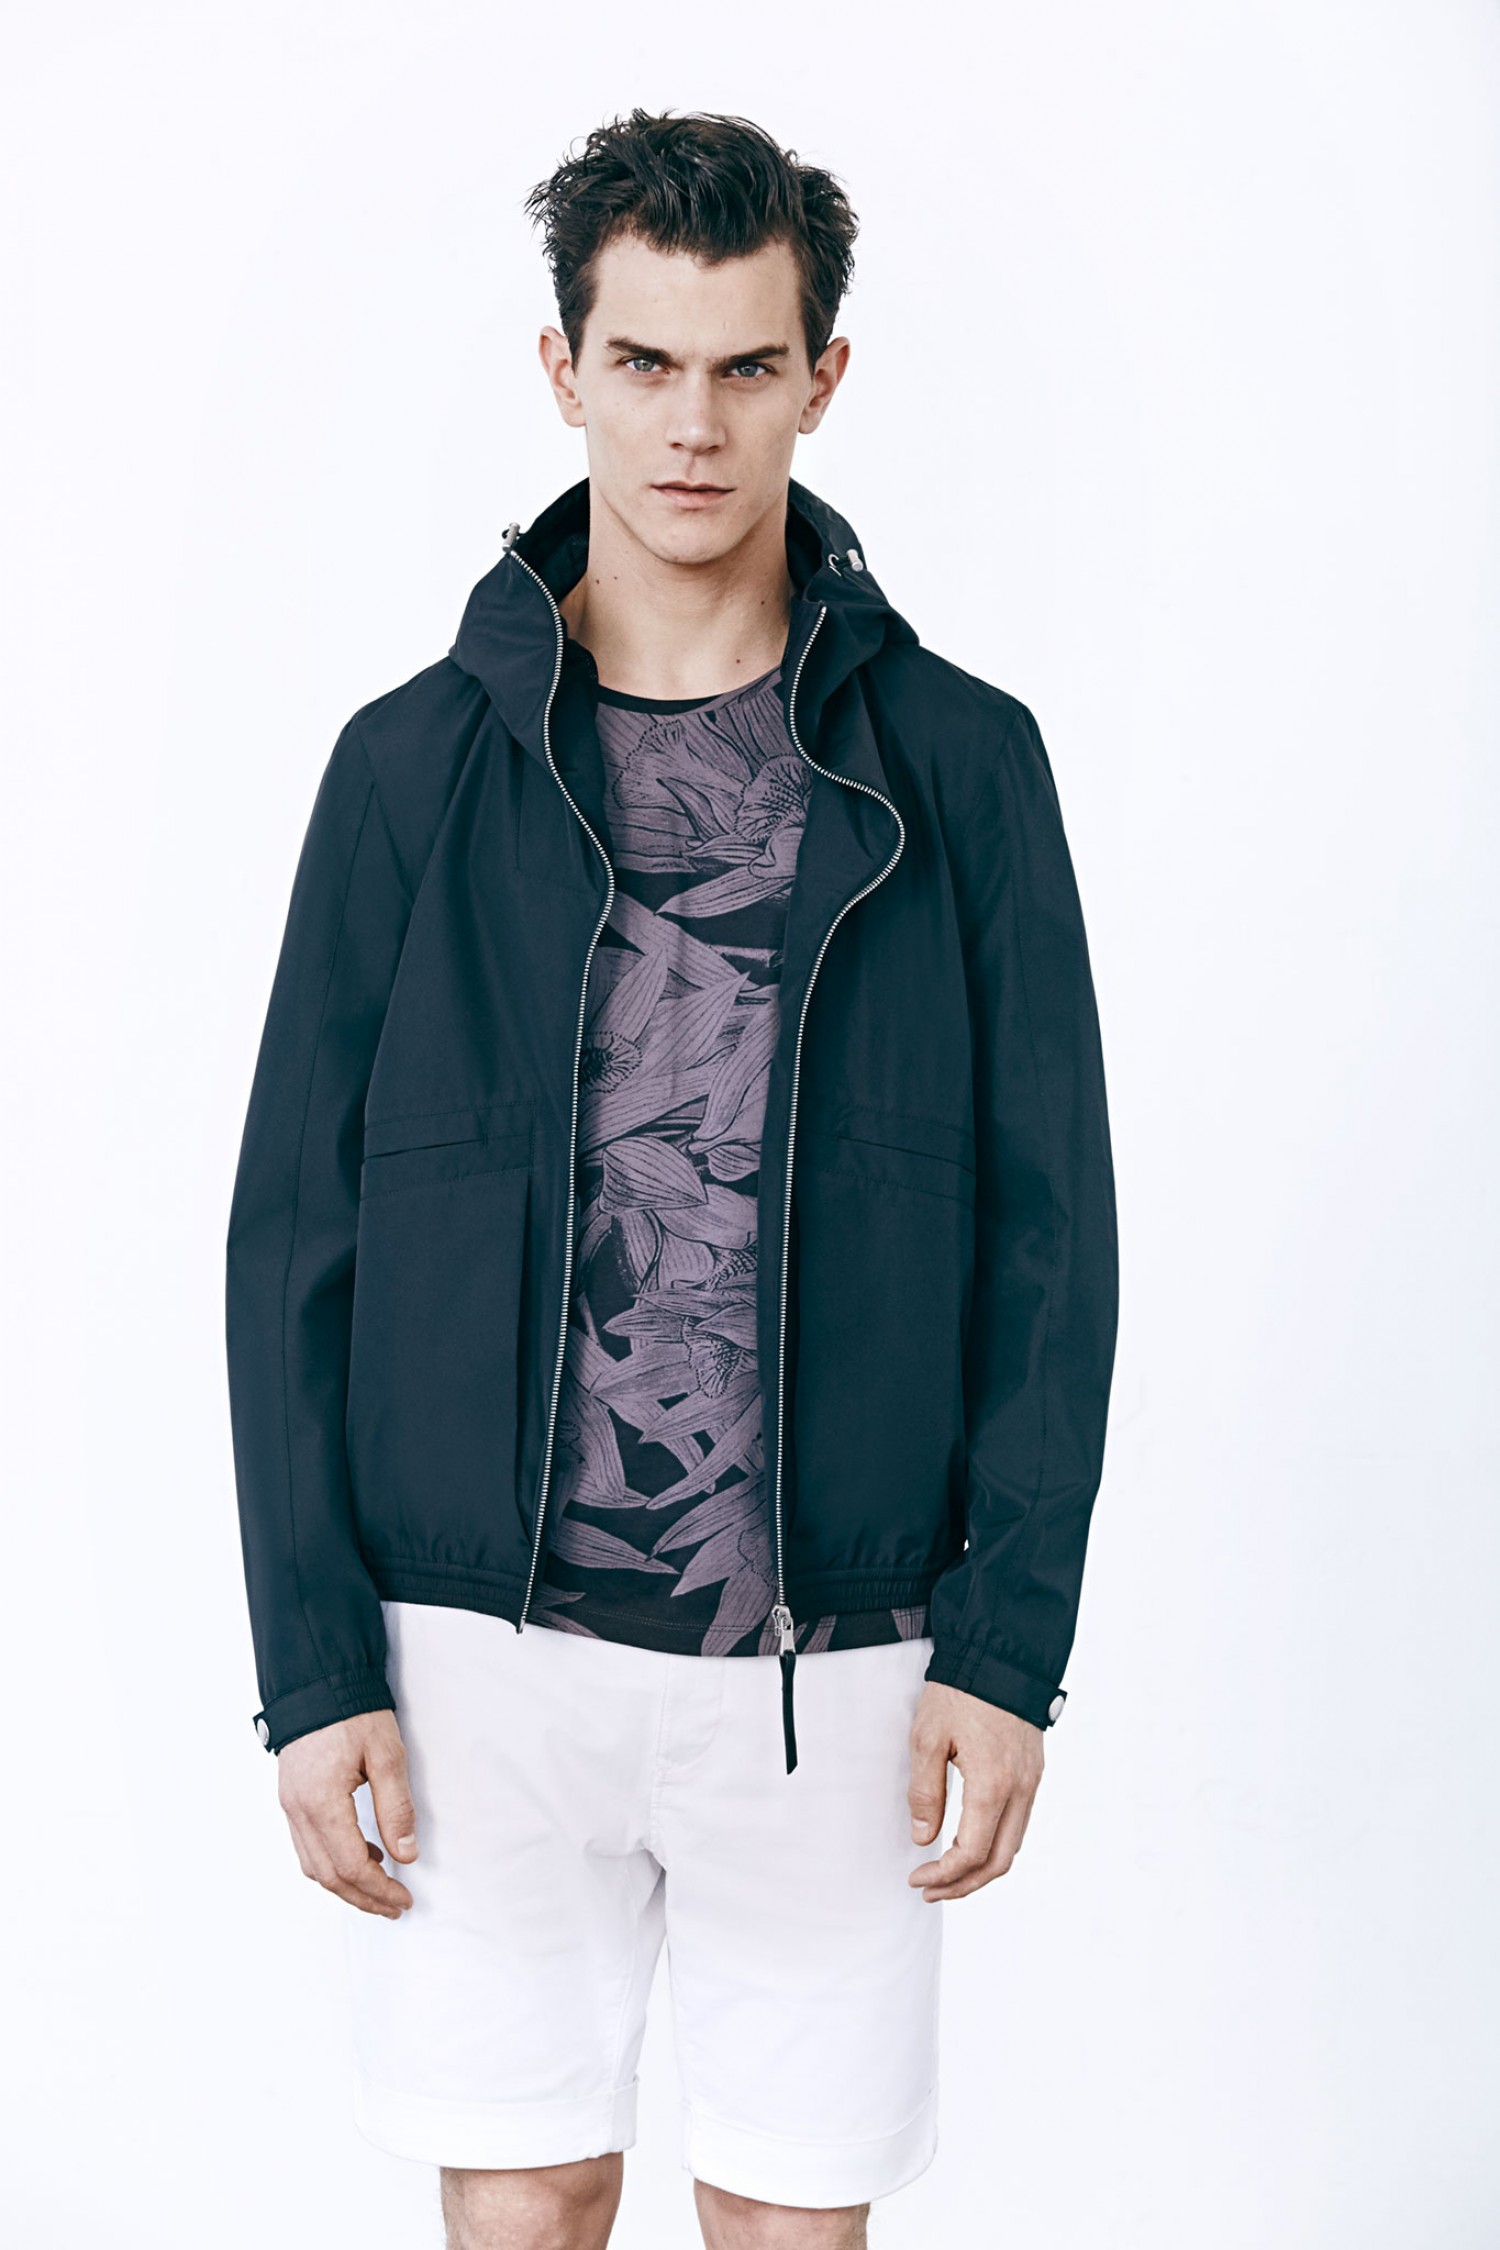 Vincent LaCrocq Models Navy Styles for Mango Men Spring 2015 Lookbook ...